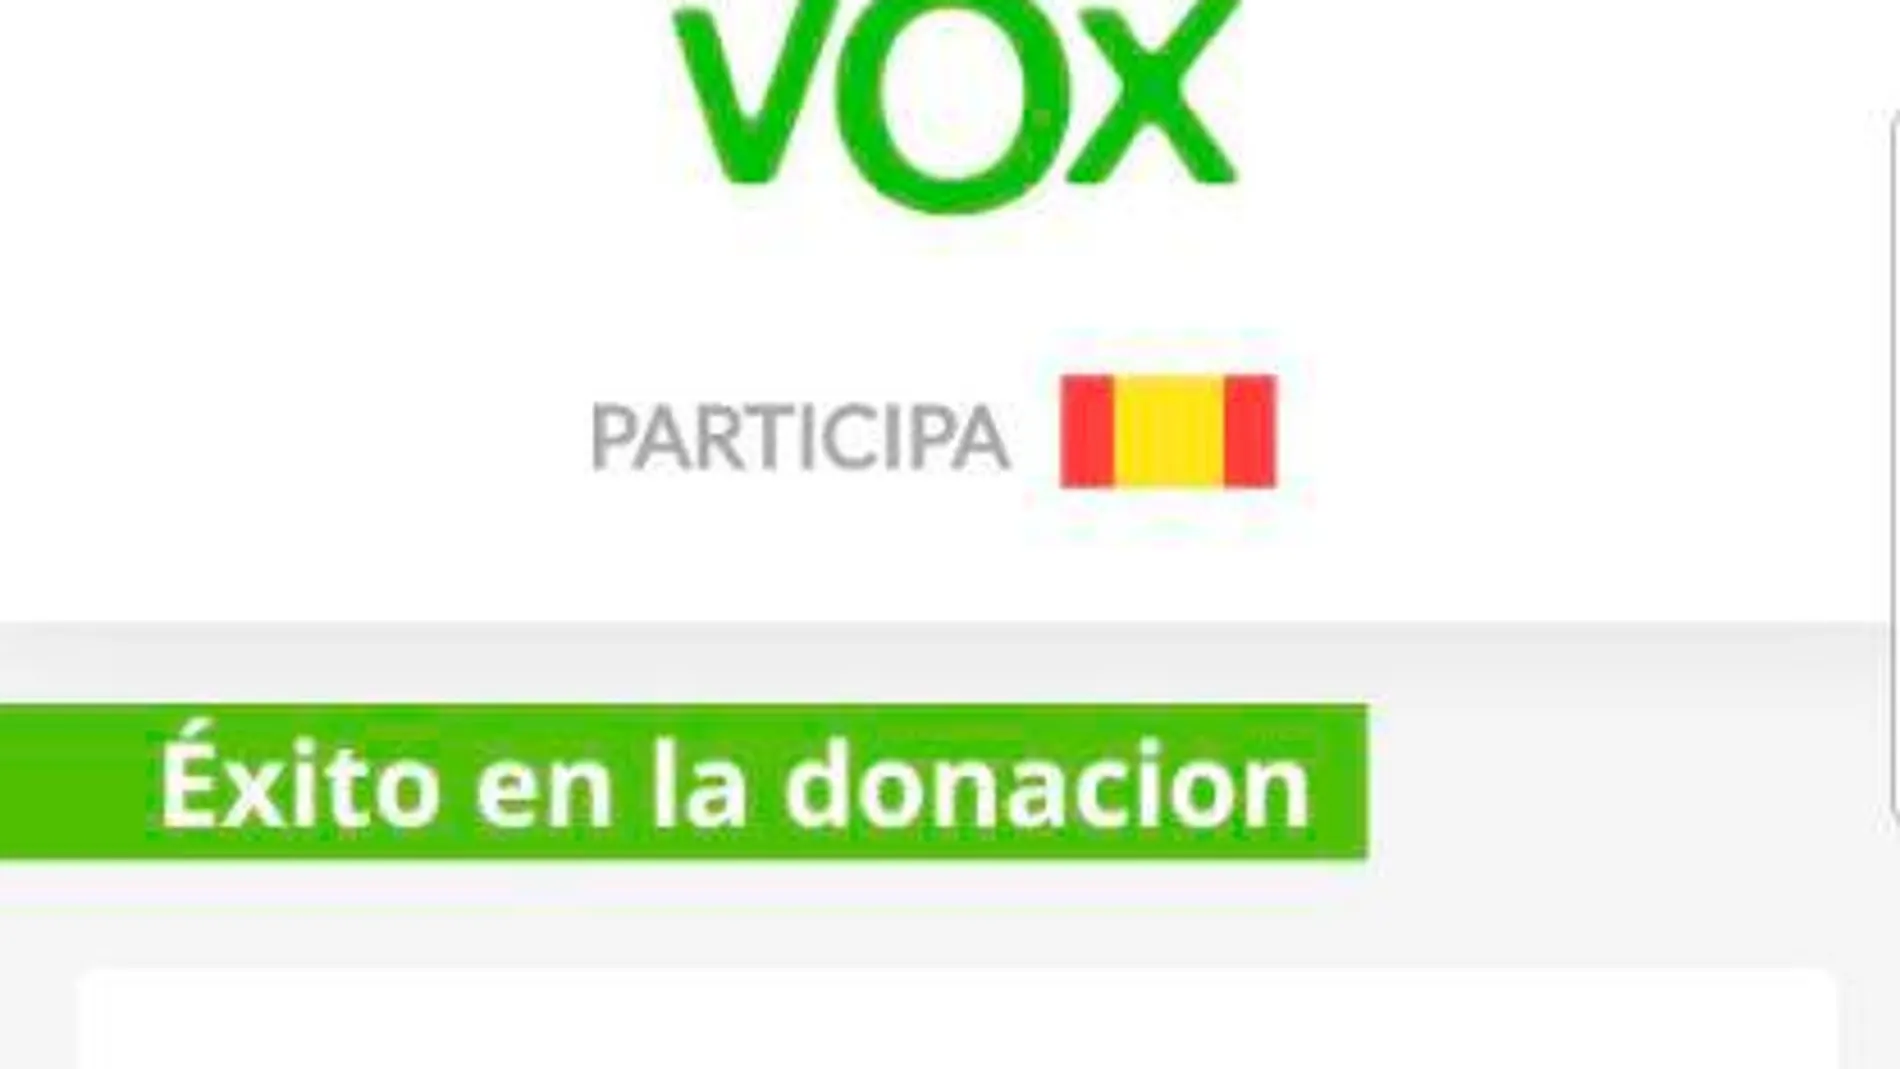 "Ayudemos a que Borja sea tendencia en España", anunció Vox en Twitter